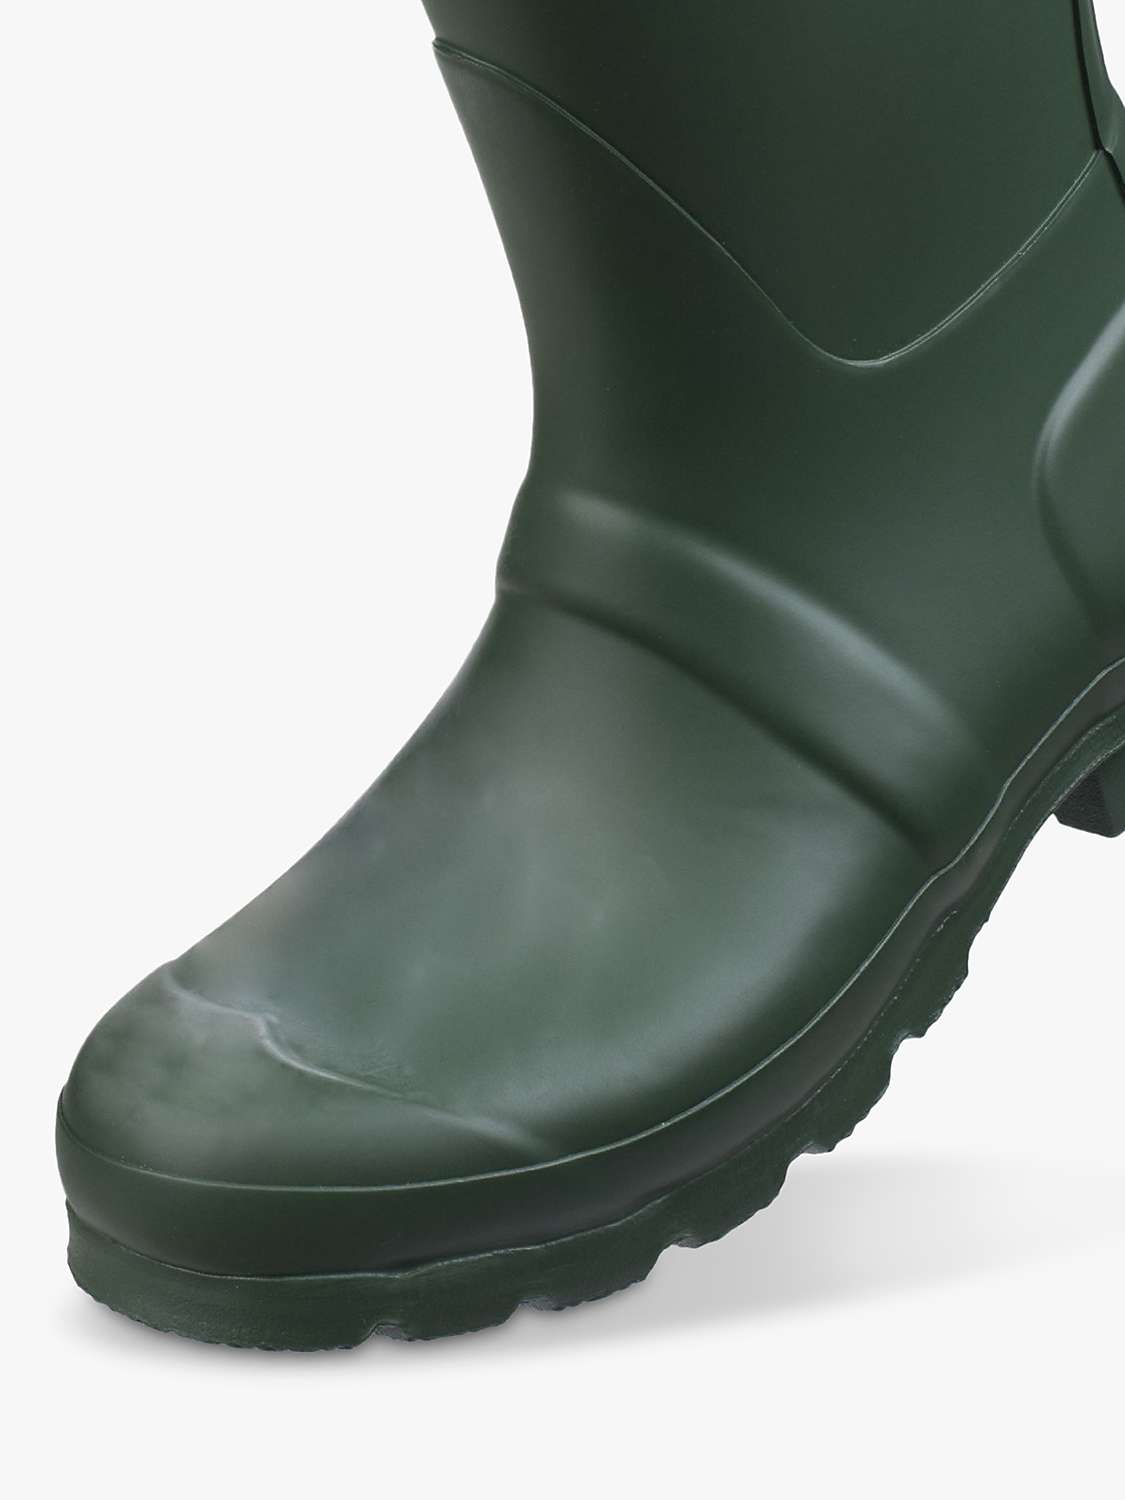 Buy Hunter Original Wellington Tall Boots Online at johnlewis.com